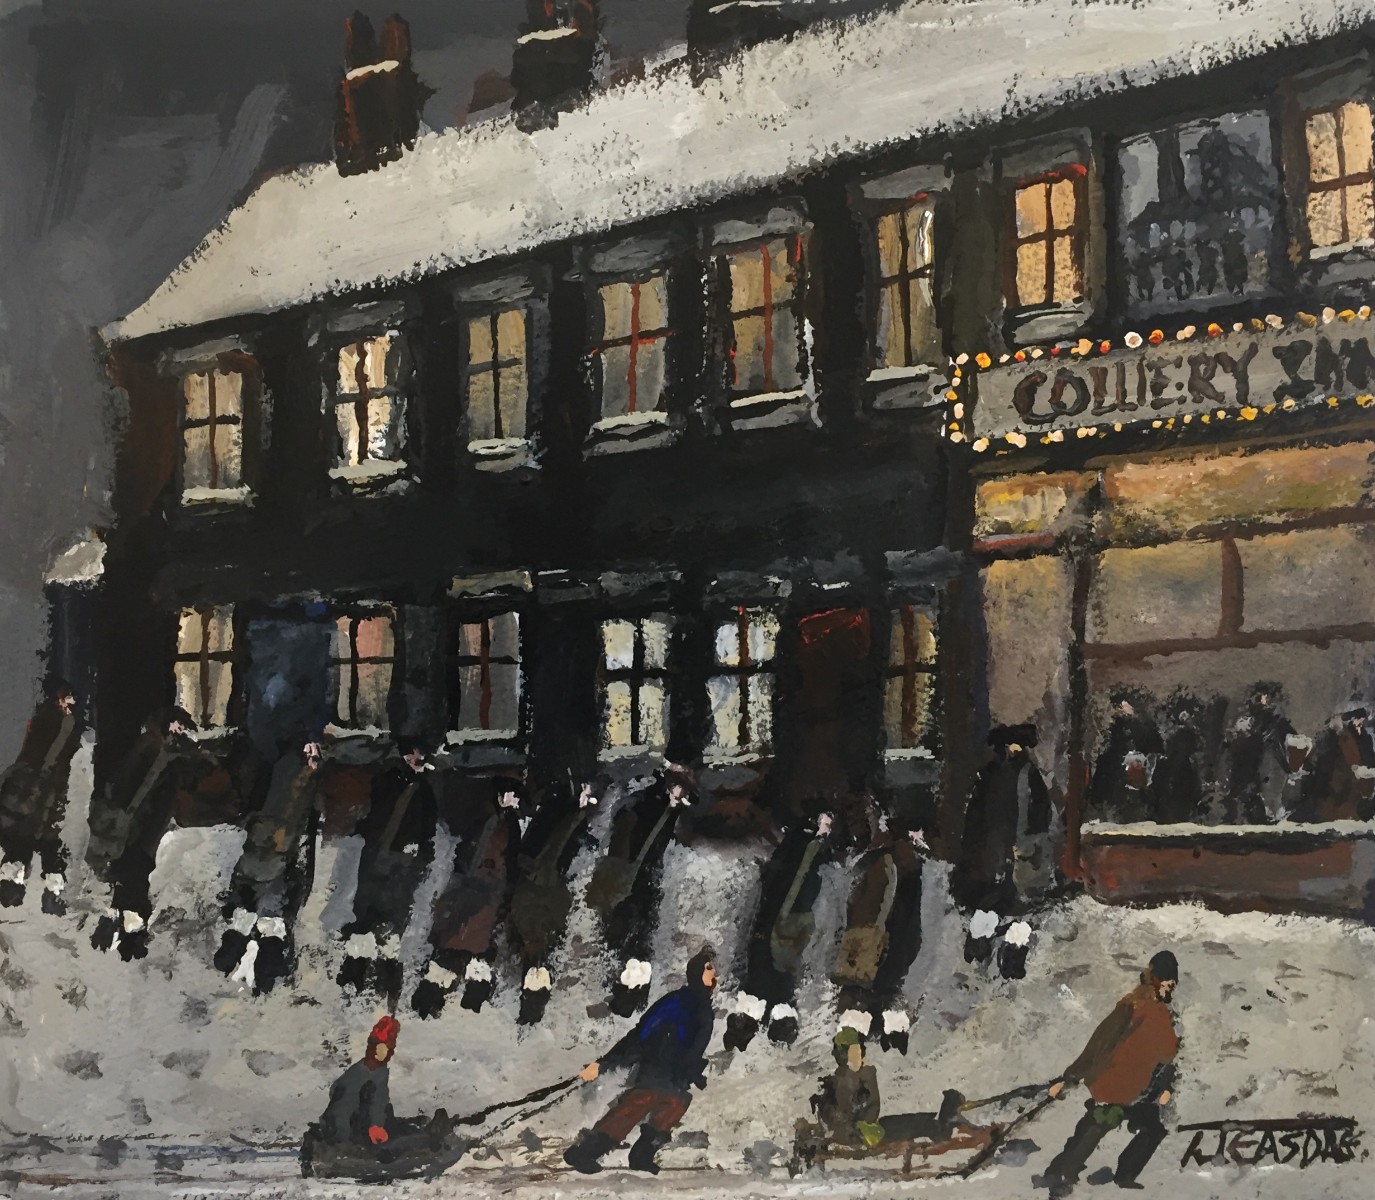 Colliery Inn by Malcolm Teasdale